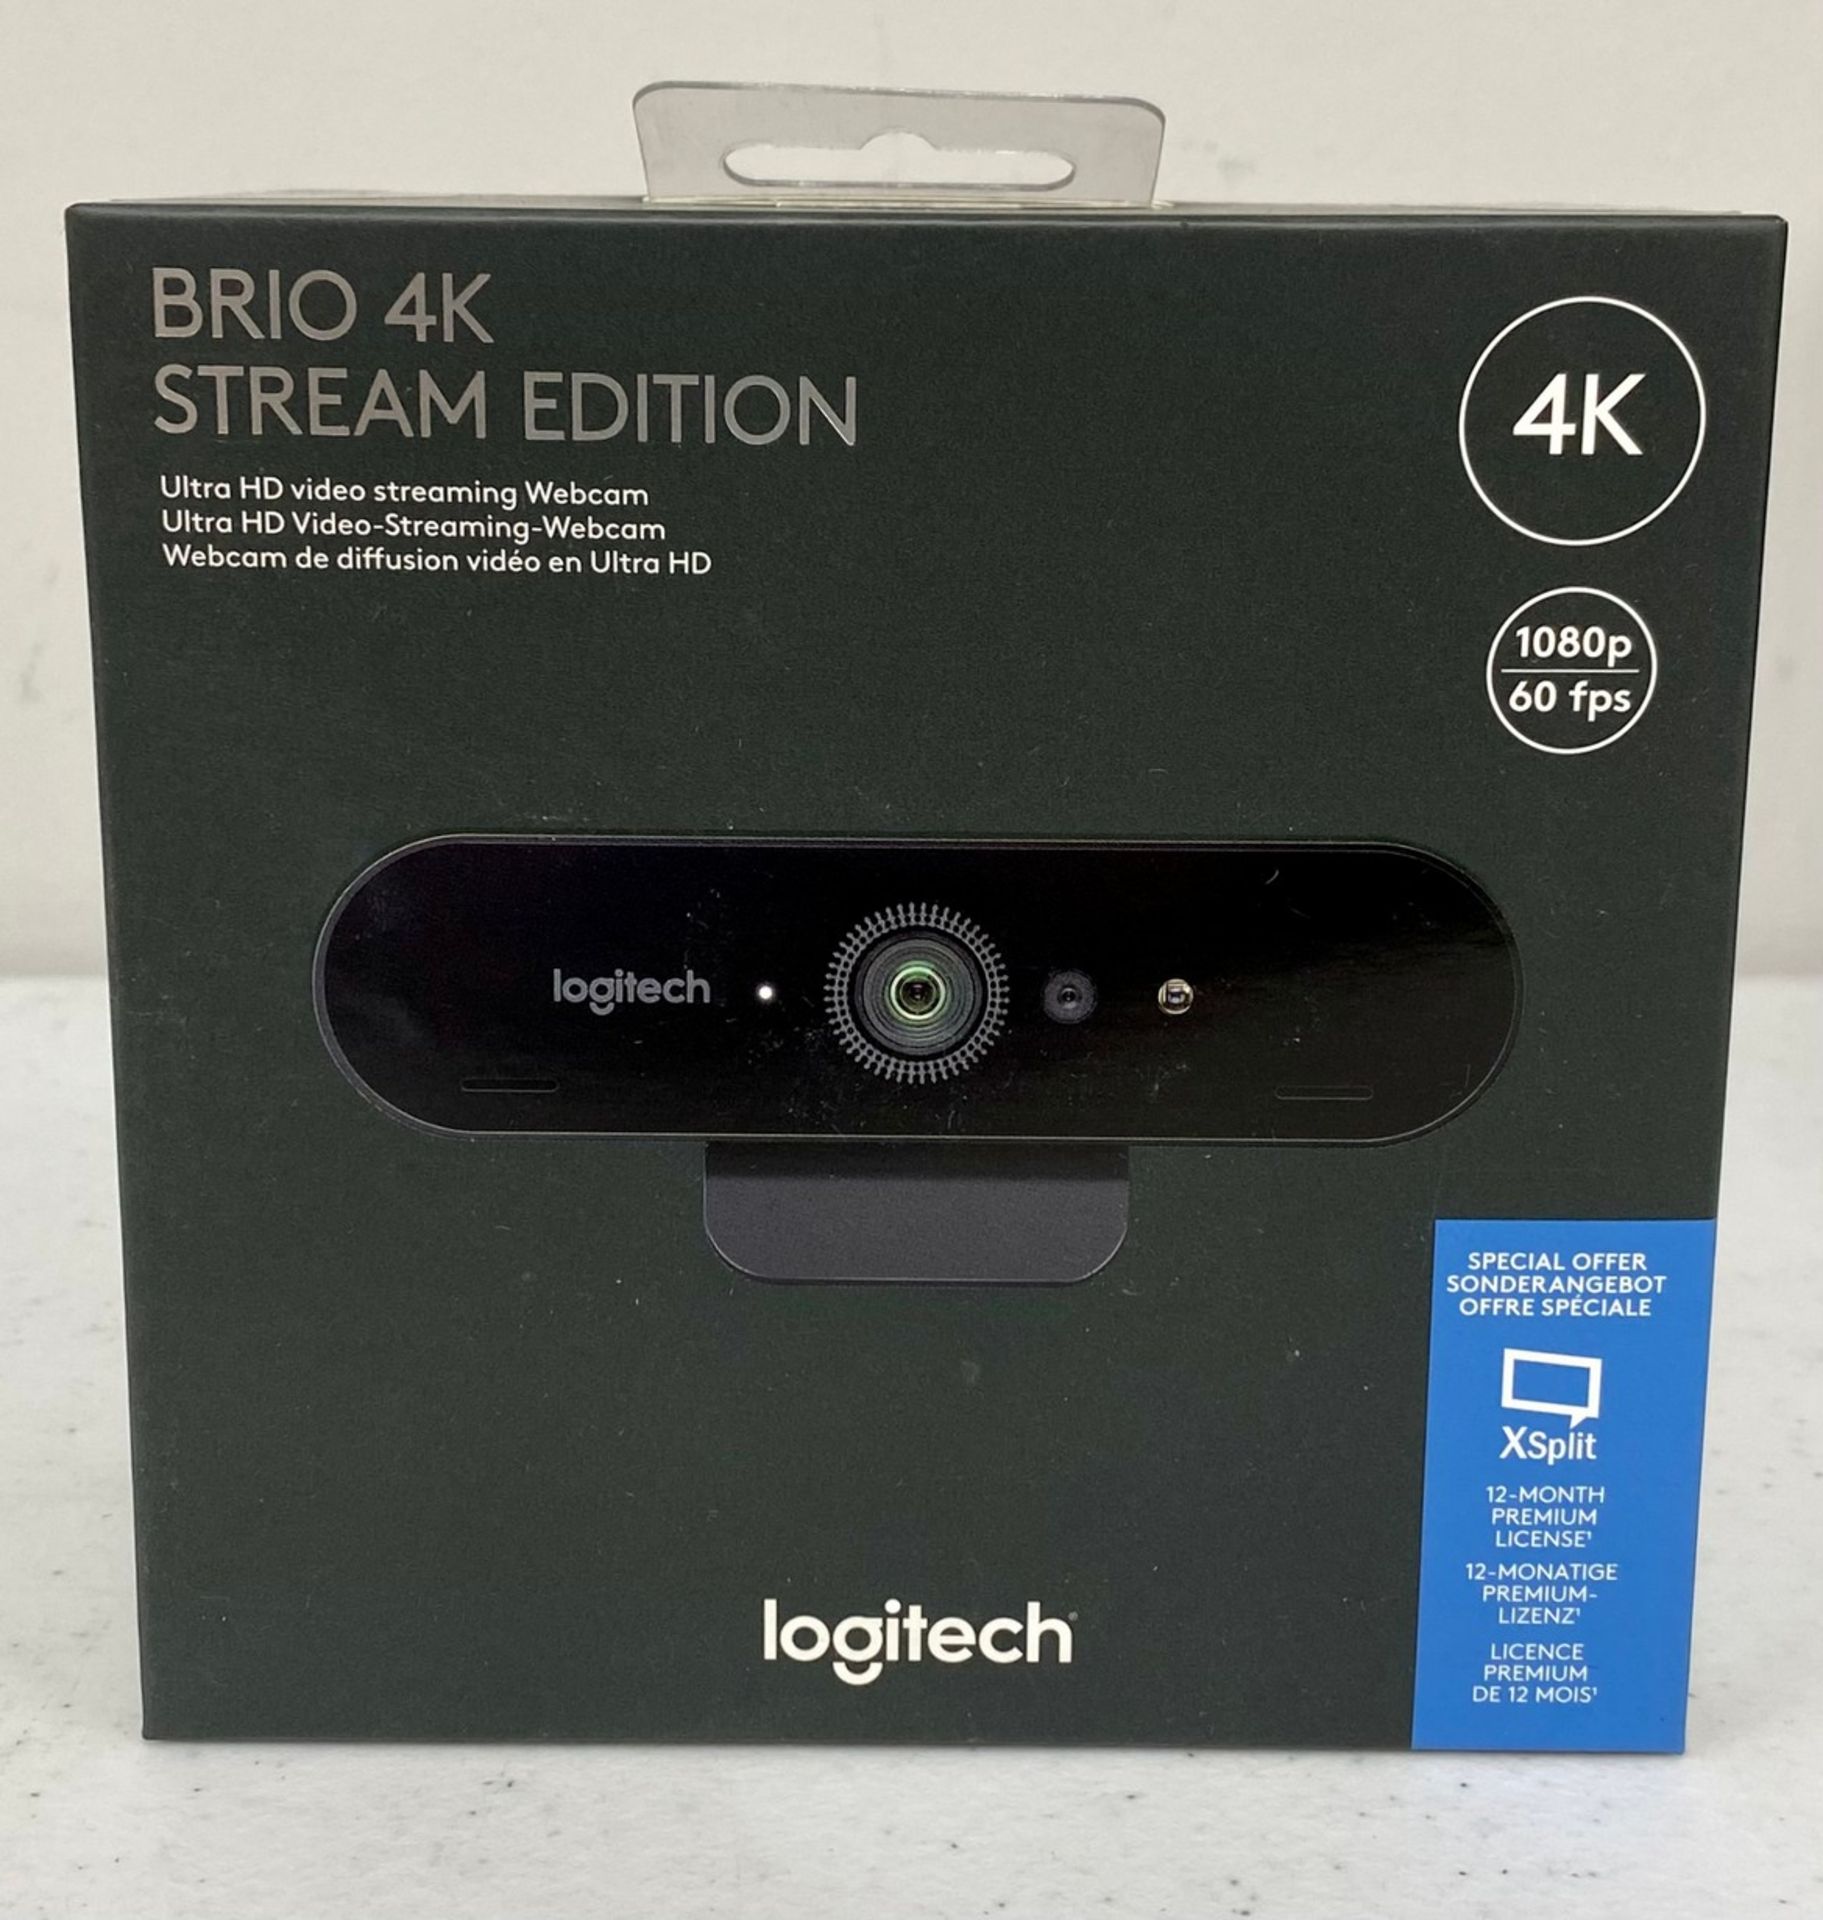 A boxed as new Logitech Brio 4K Stream Edition Webcam (Box sealed) (EAN: 5099206075078).